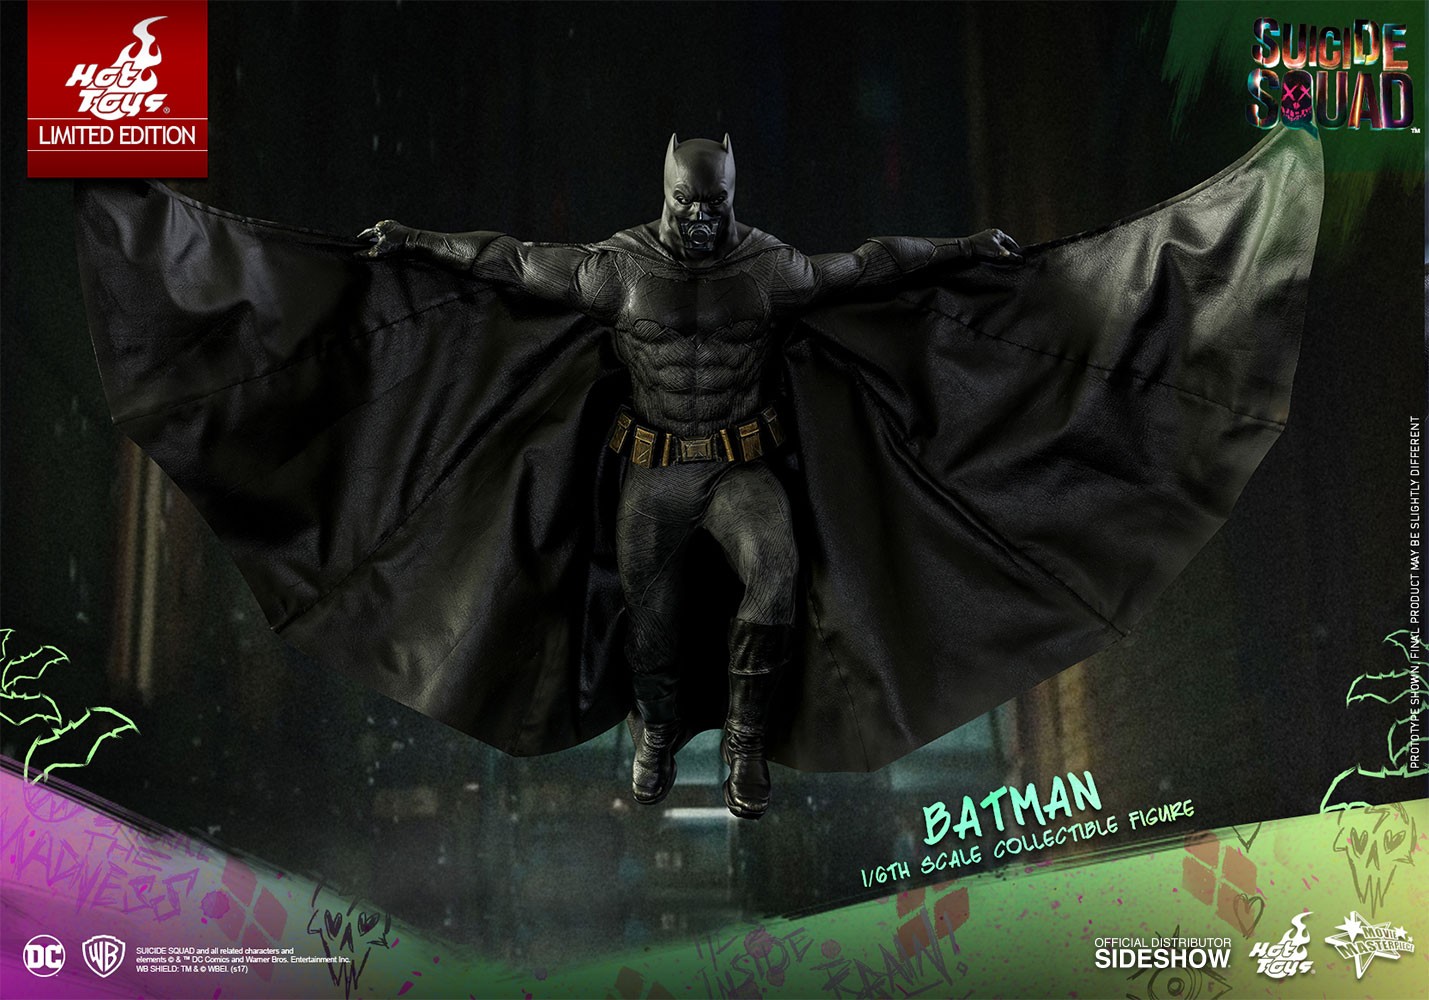 Batman Exclusive Edition (Prototype Shown) View 21